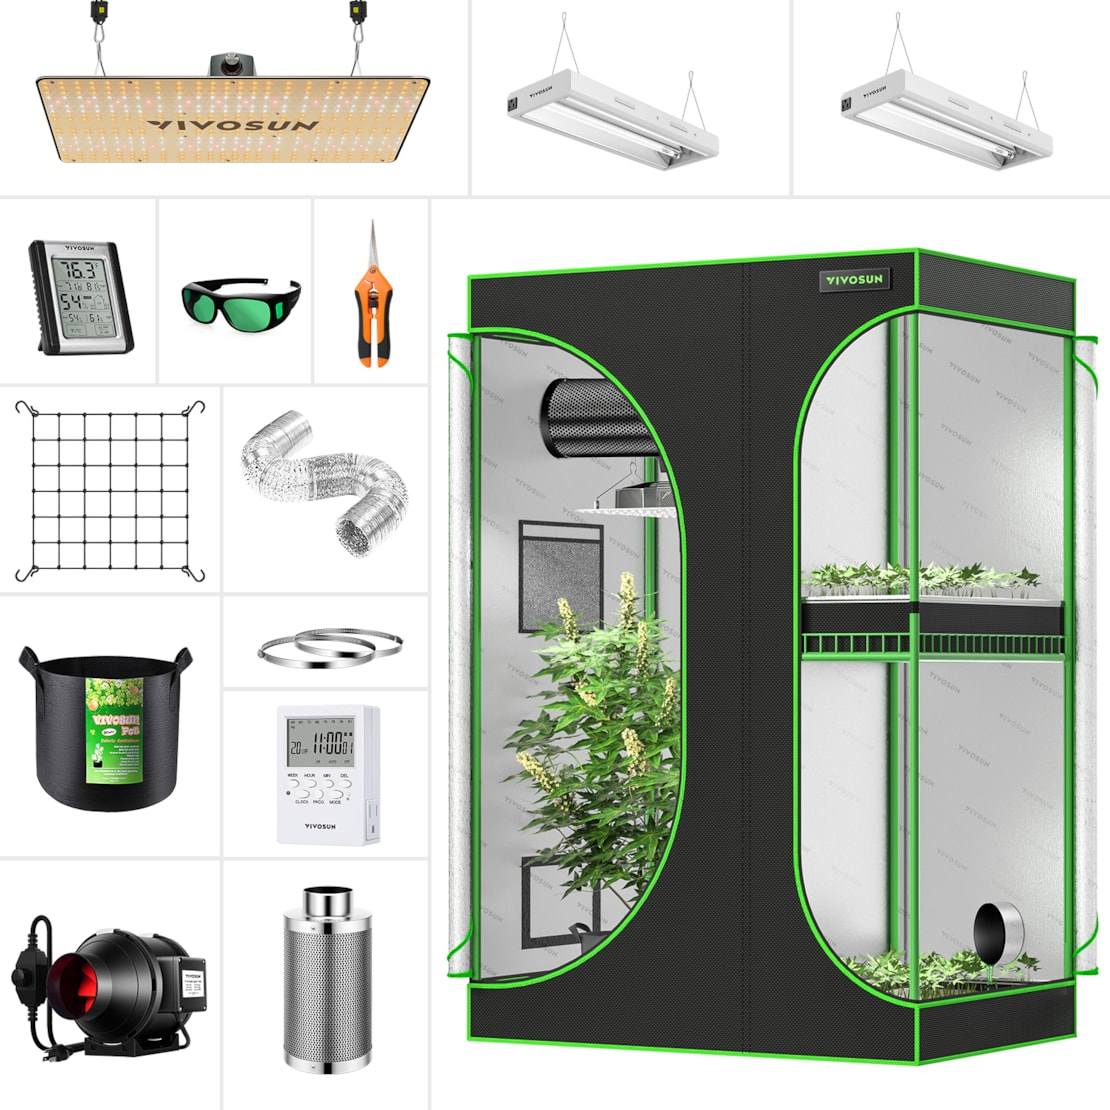 VIVOSUN GIY 4 x 3 ft. Complete Grow Kit with 2-in-1 Grow Tent Kit, VS2000 & T5 Grow Light, 48" x 36" x 72"